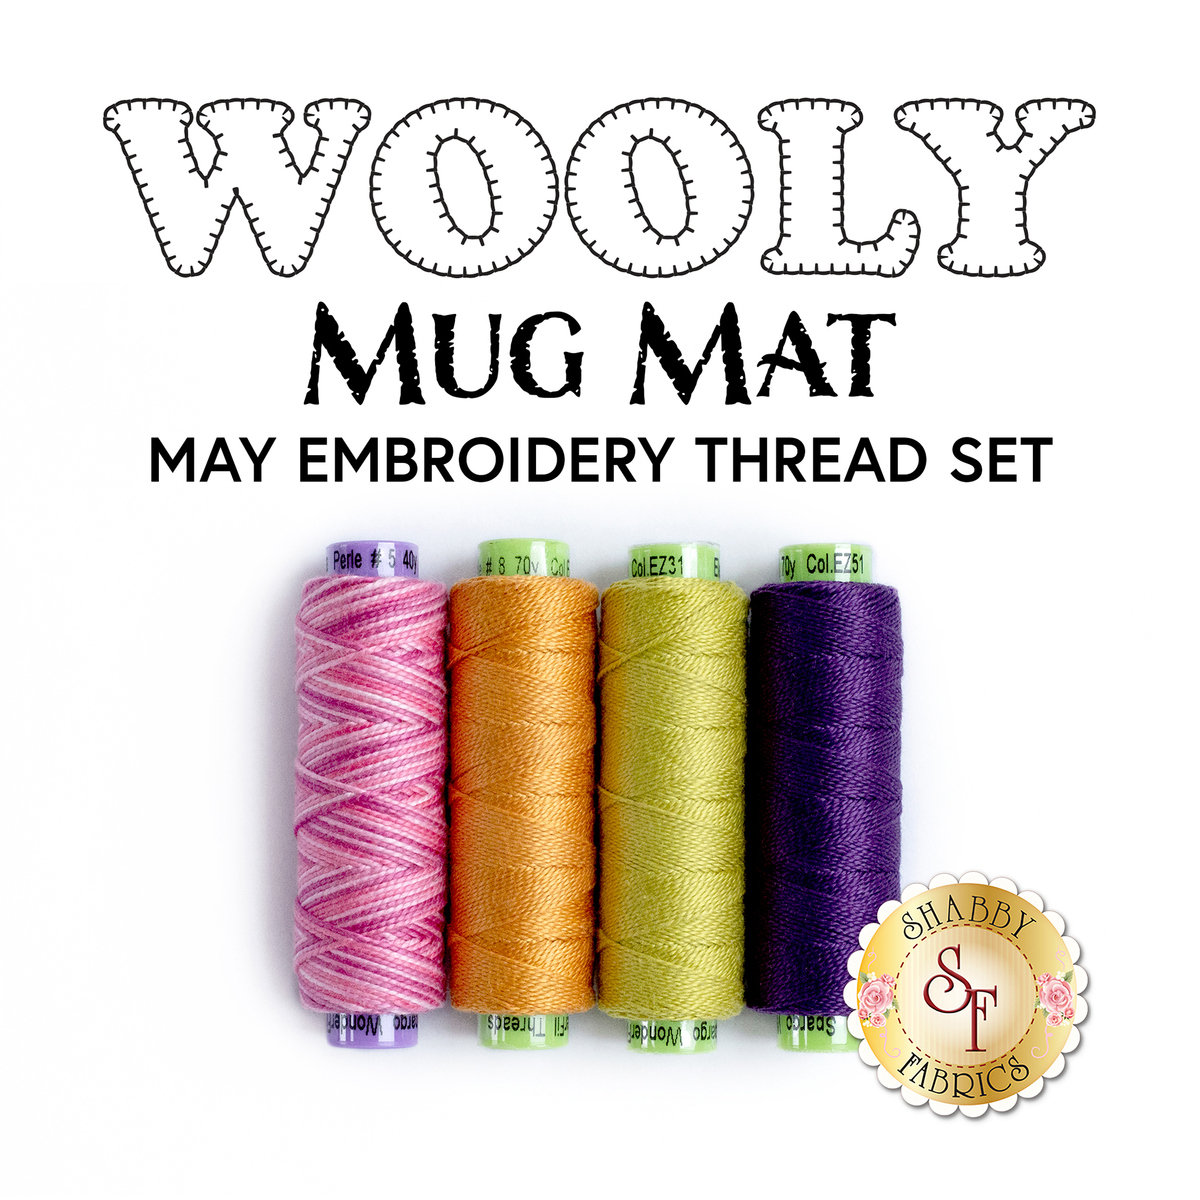 Wooly Mug Mat Series - May Kit